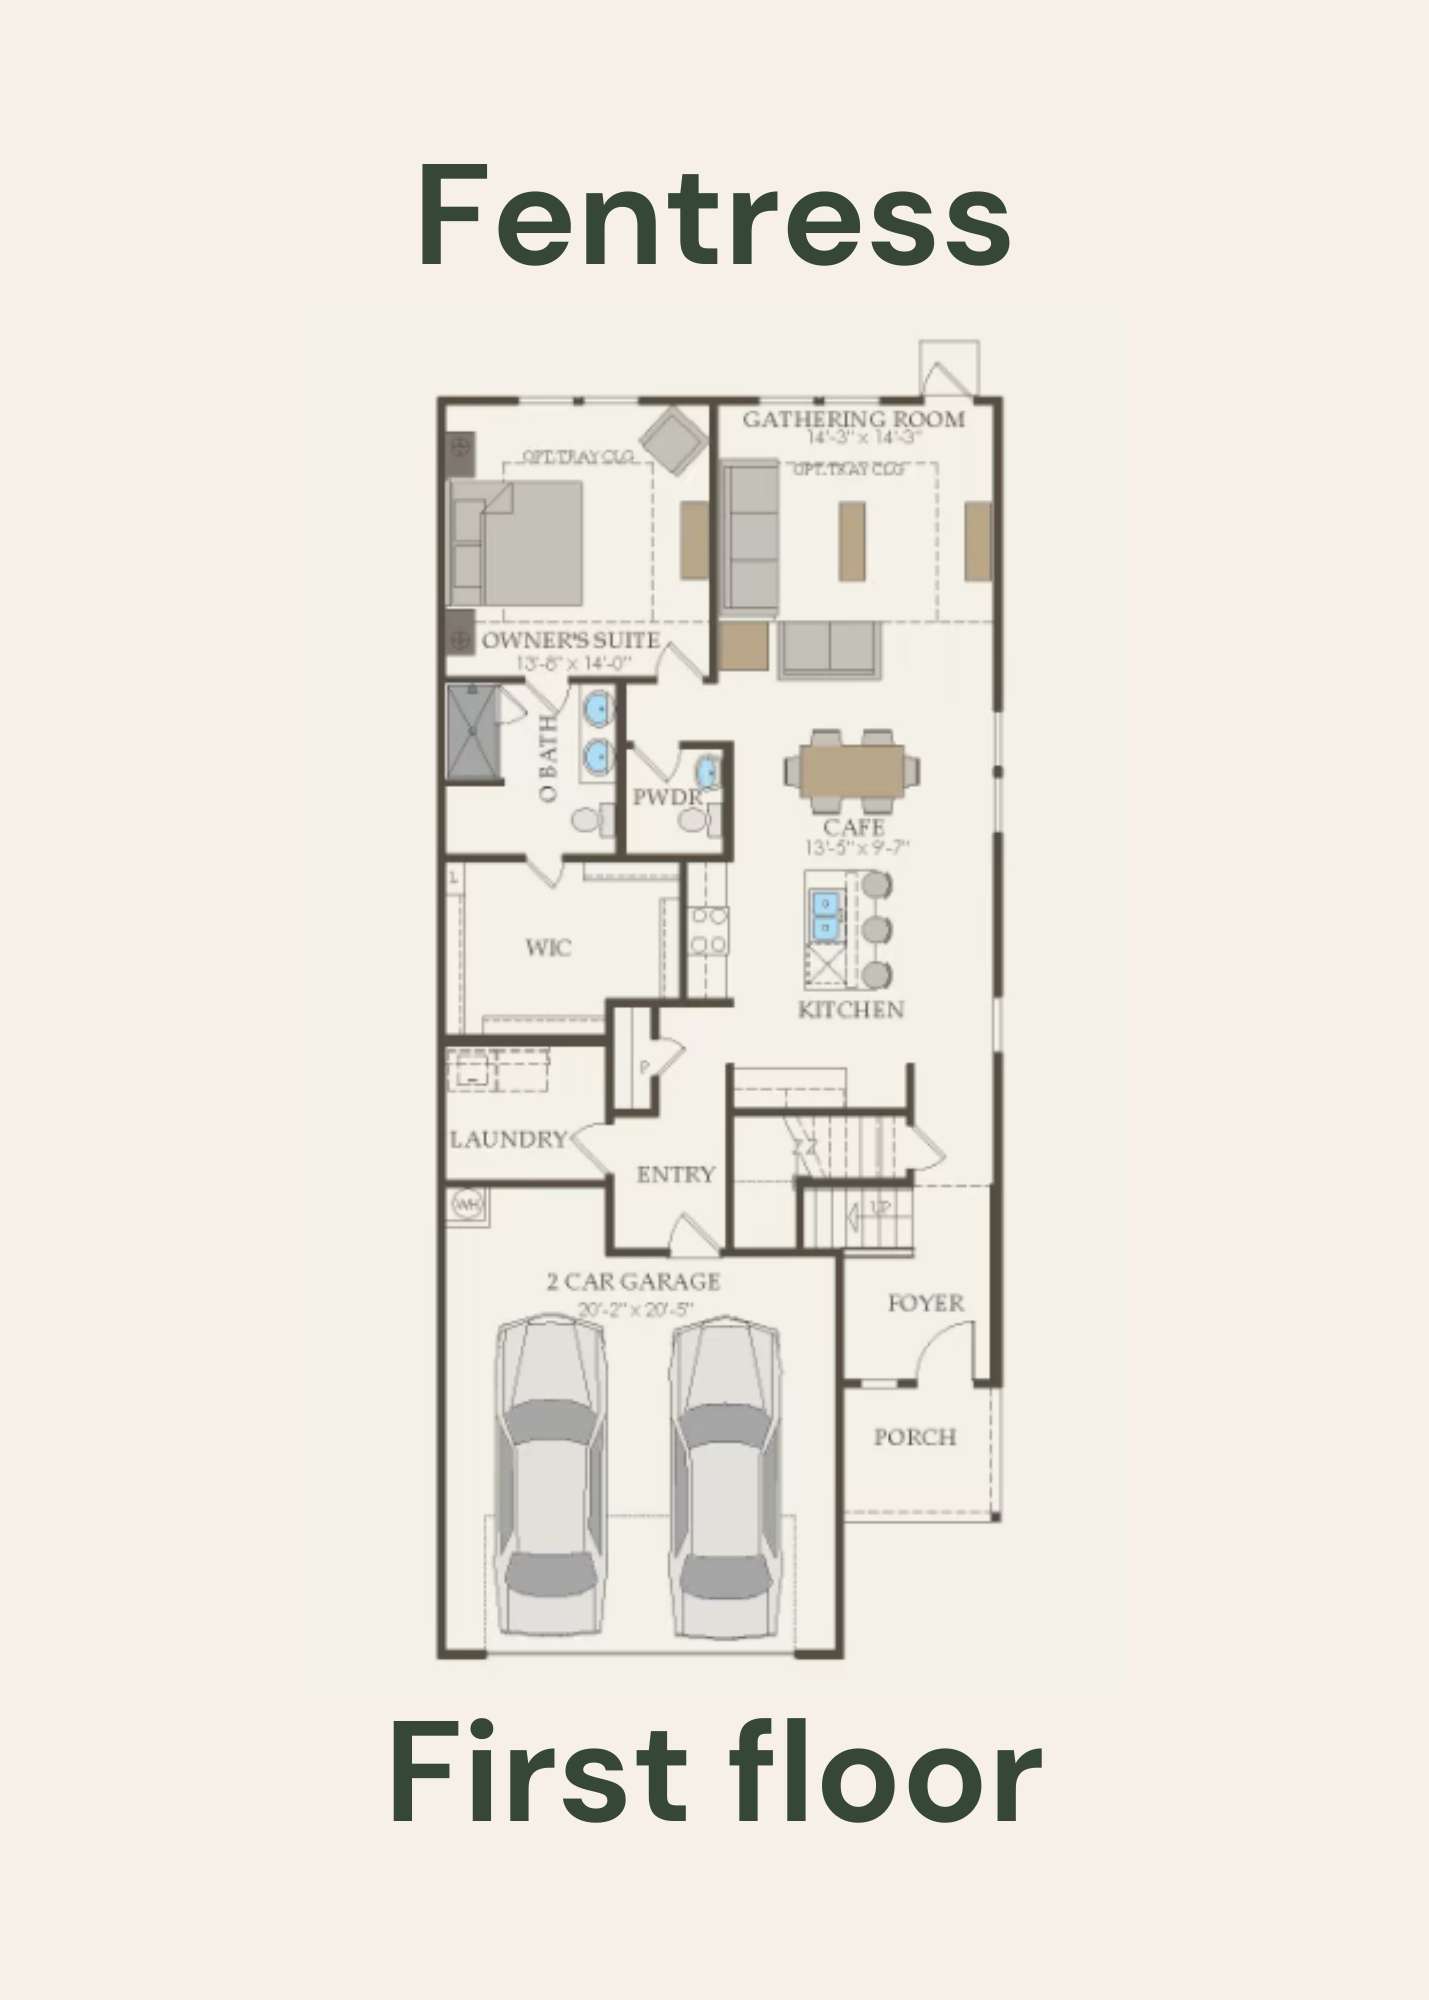 Fentress First Floor - Floor Plan by Centex Homes